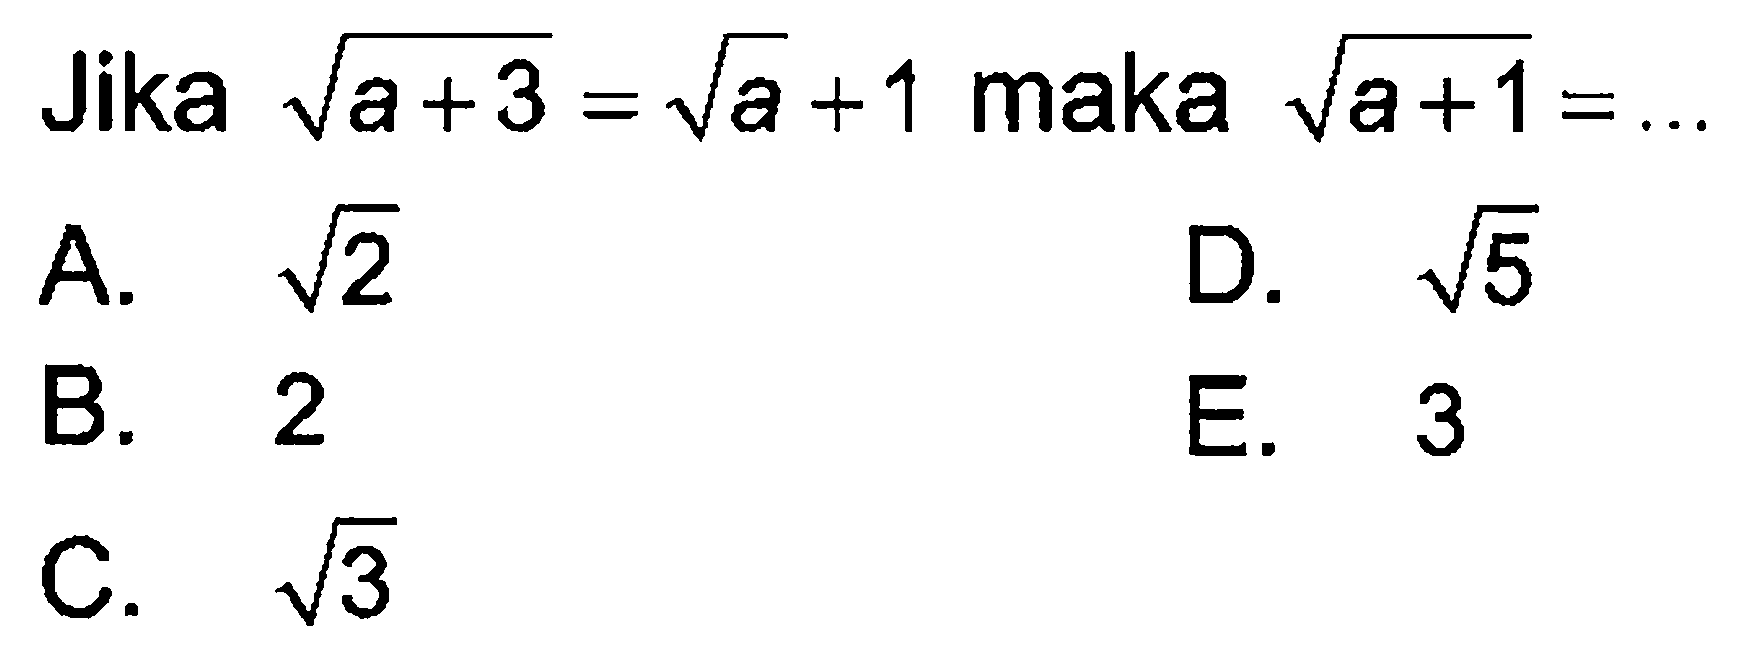 Jika akar(a + 3) = akar(a + 1) maka akar(a + 1) = ...